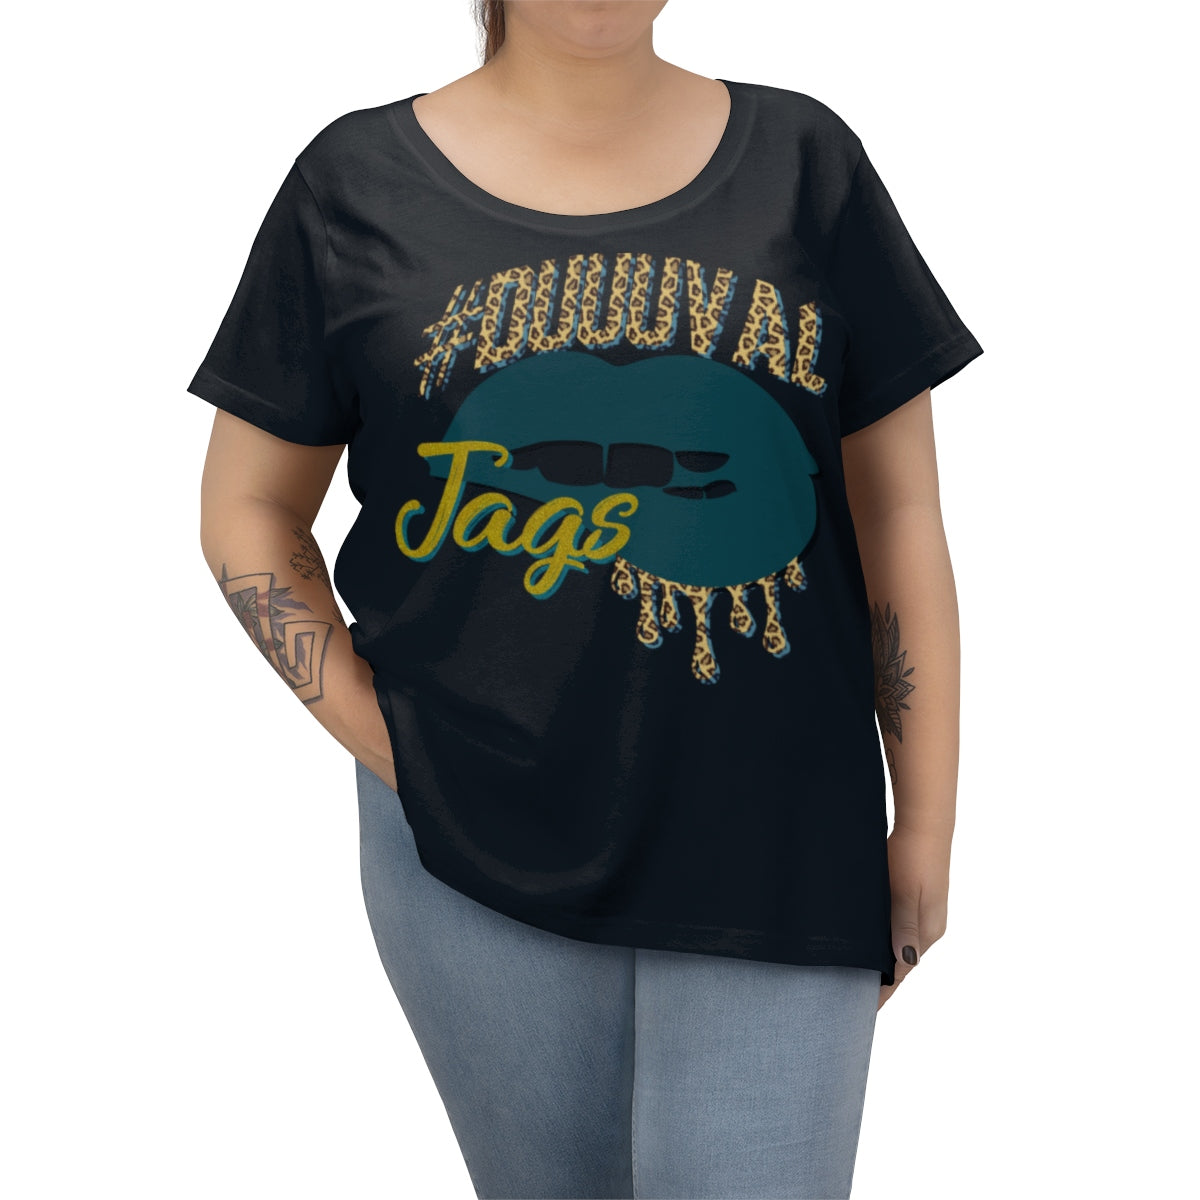 Jacksonville Jaguars inspired #Duuuval Football Dripping Lips Women's Curvy Tee